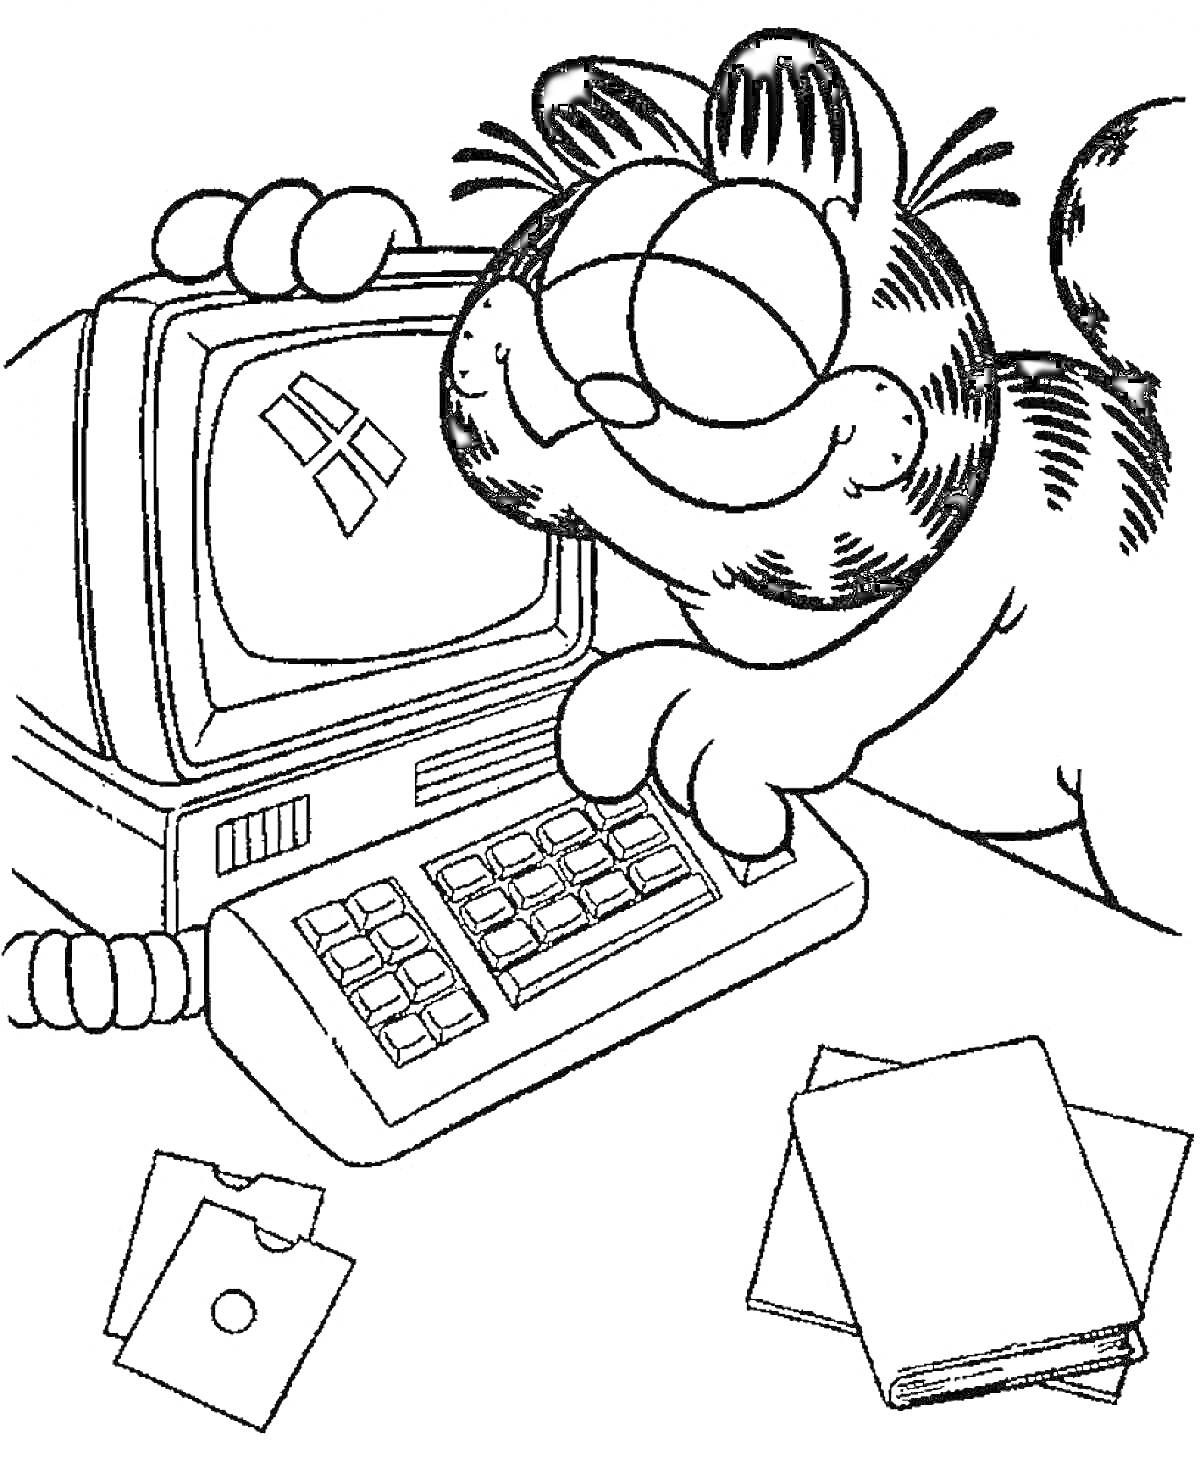 На раскраске изображено: Кот, Компьютер, Монитор, Клавиатура, Документы